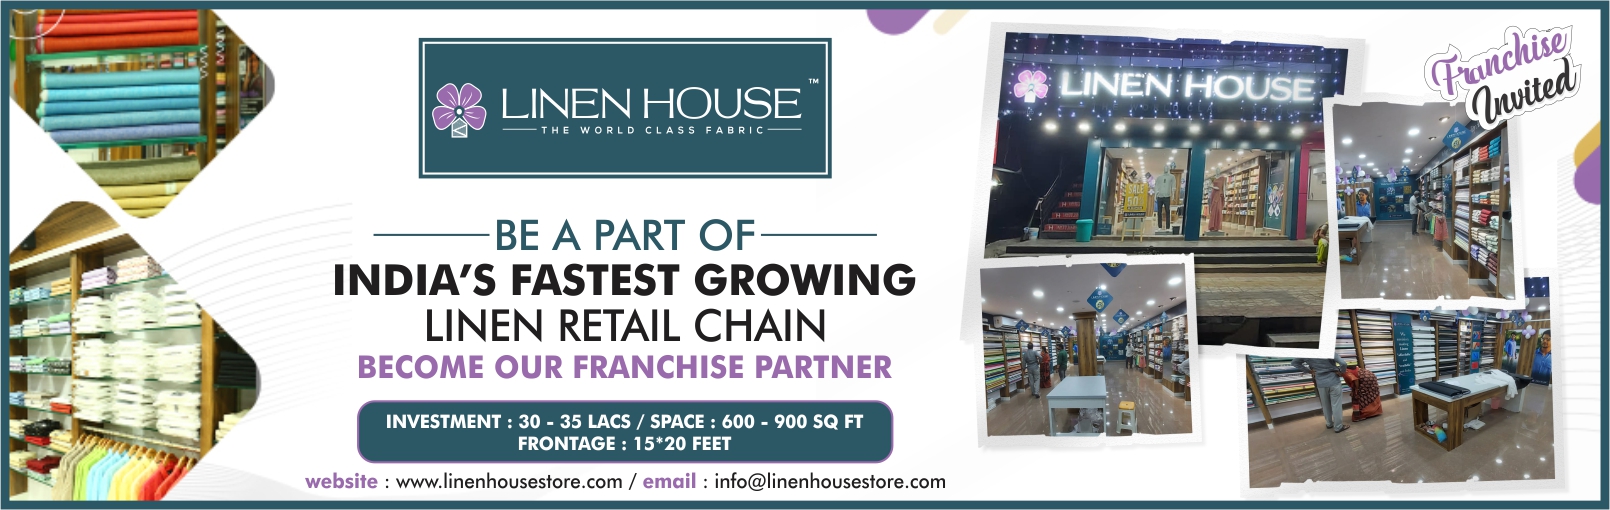 admin/uploads/brand_registration/Linen House - Be A Part of Indias Fastest Growing Linen Retail Chain 